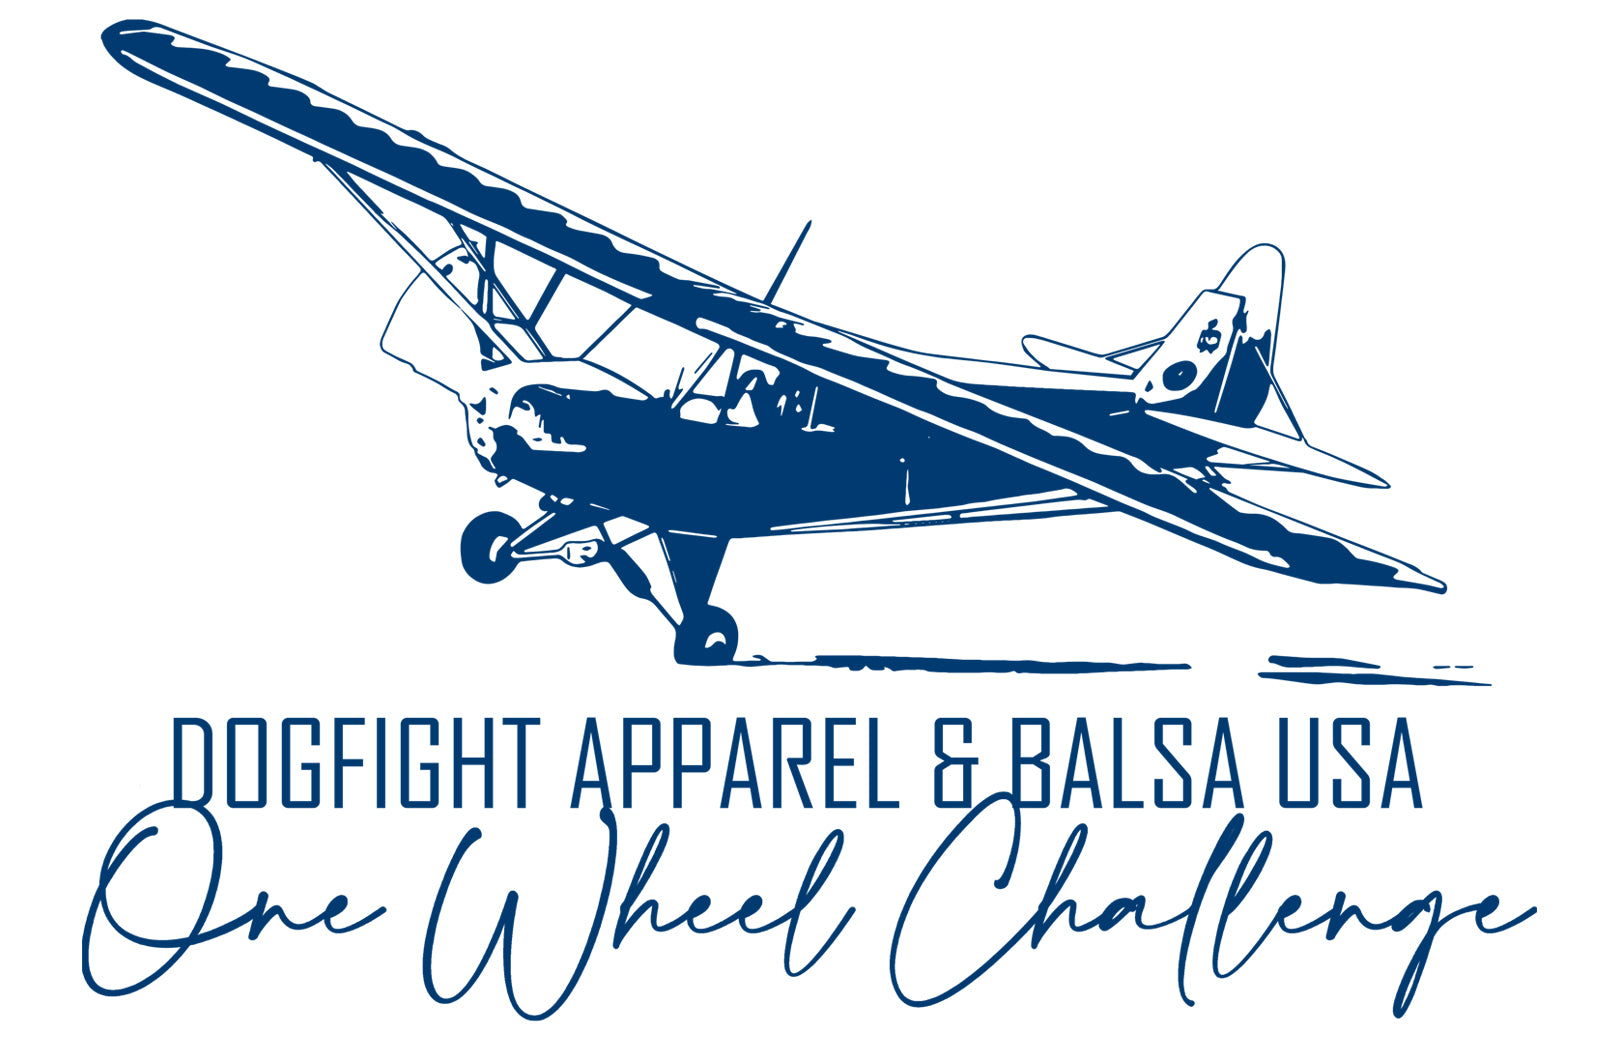 One Wheel Challenge - Dogfight Apparel & Balsa USA